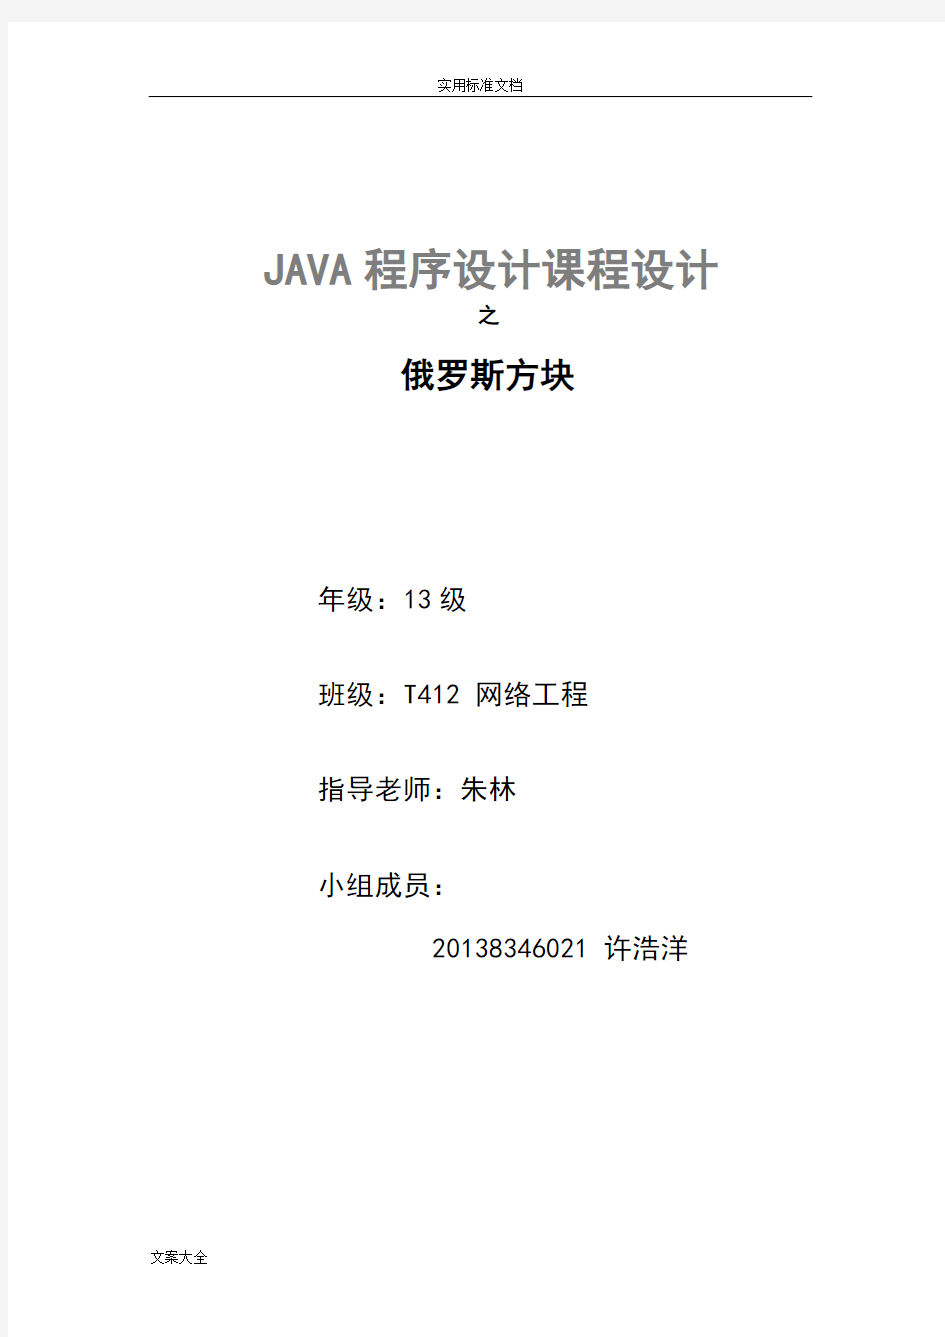 java课程设计报告材料-俄罗斯方块